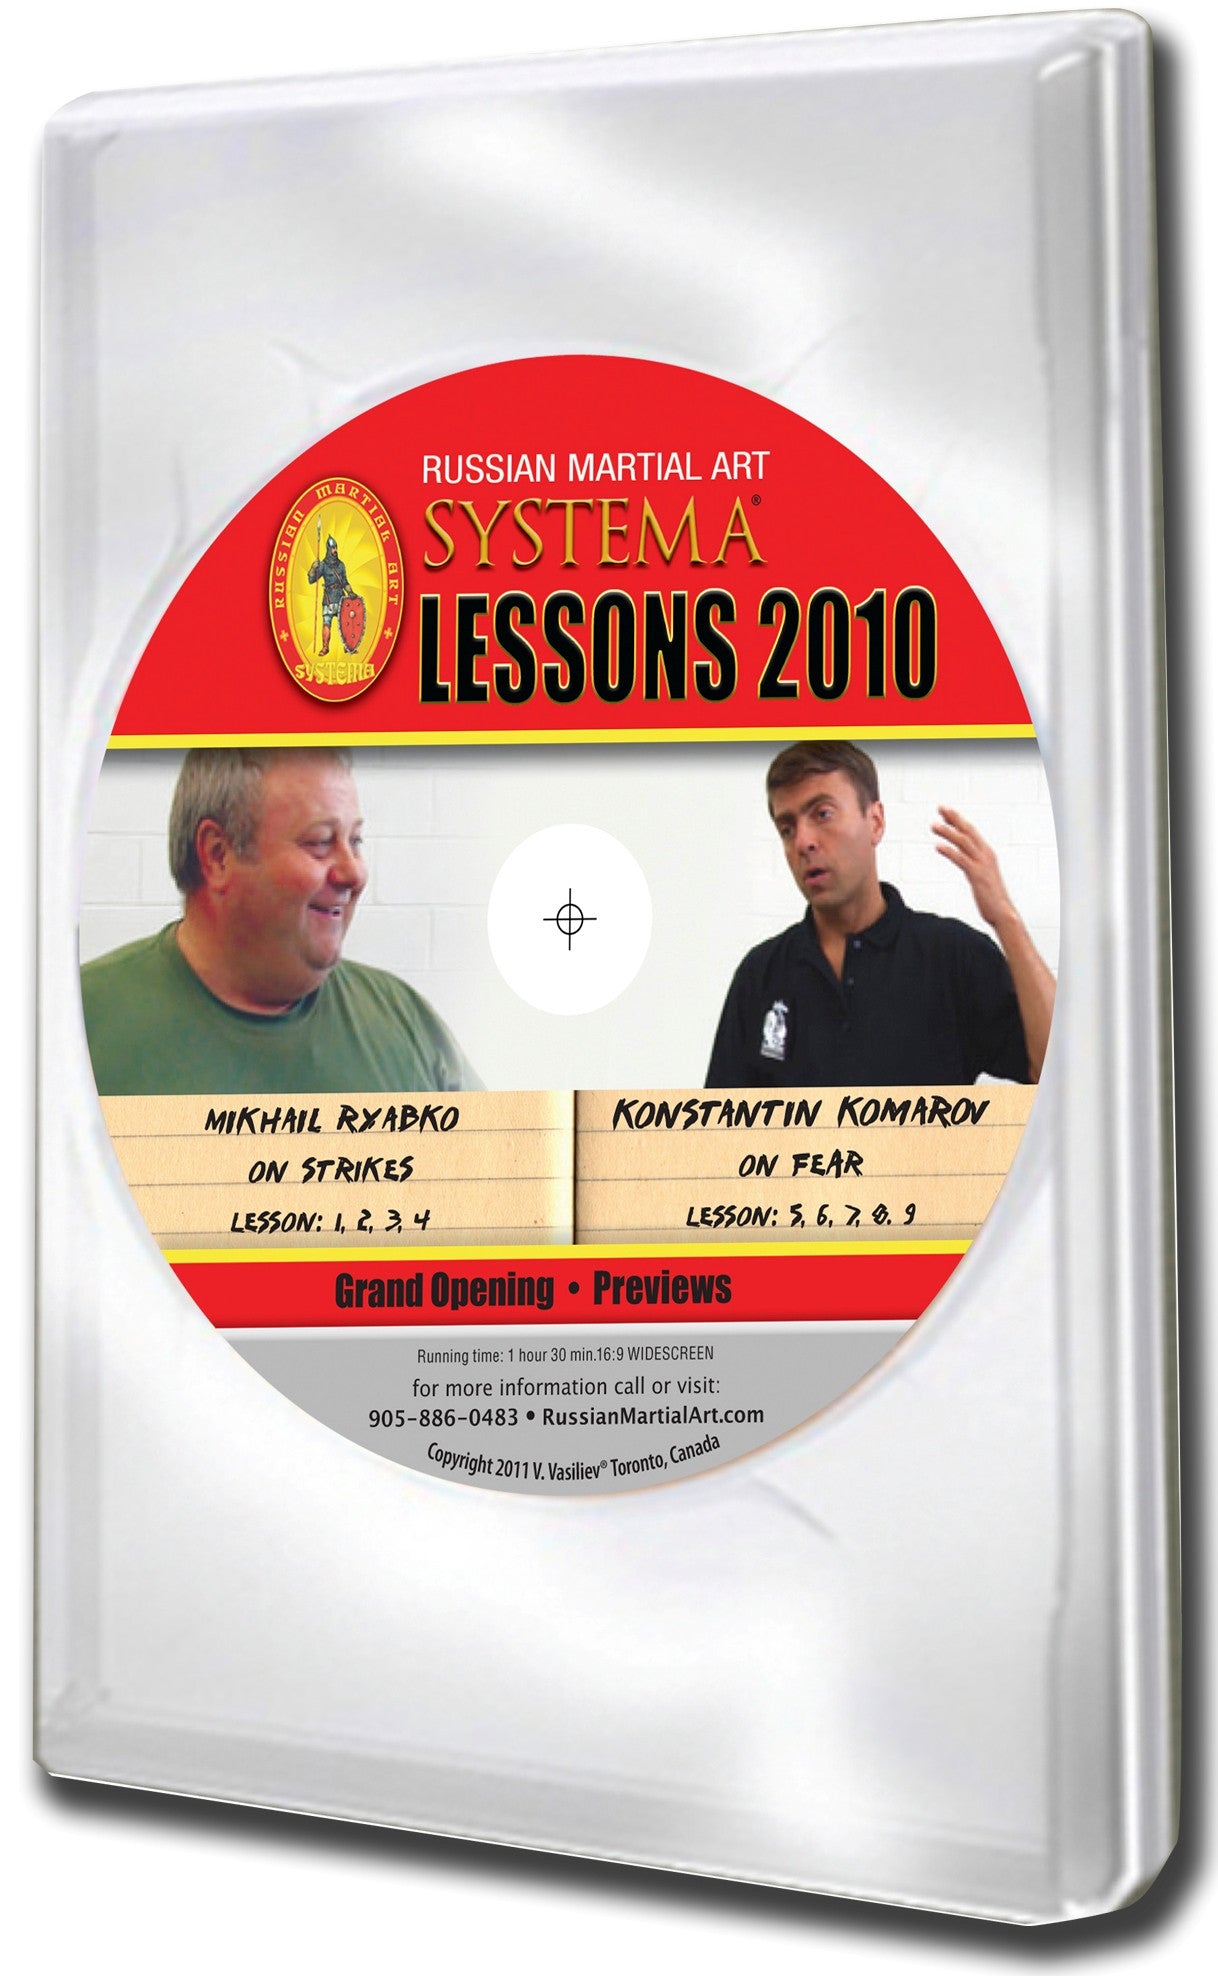 Systema Lessons 2010 DVD with Mikhail Ryabko & Konstantin Komarov - Budovideos Inc